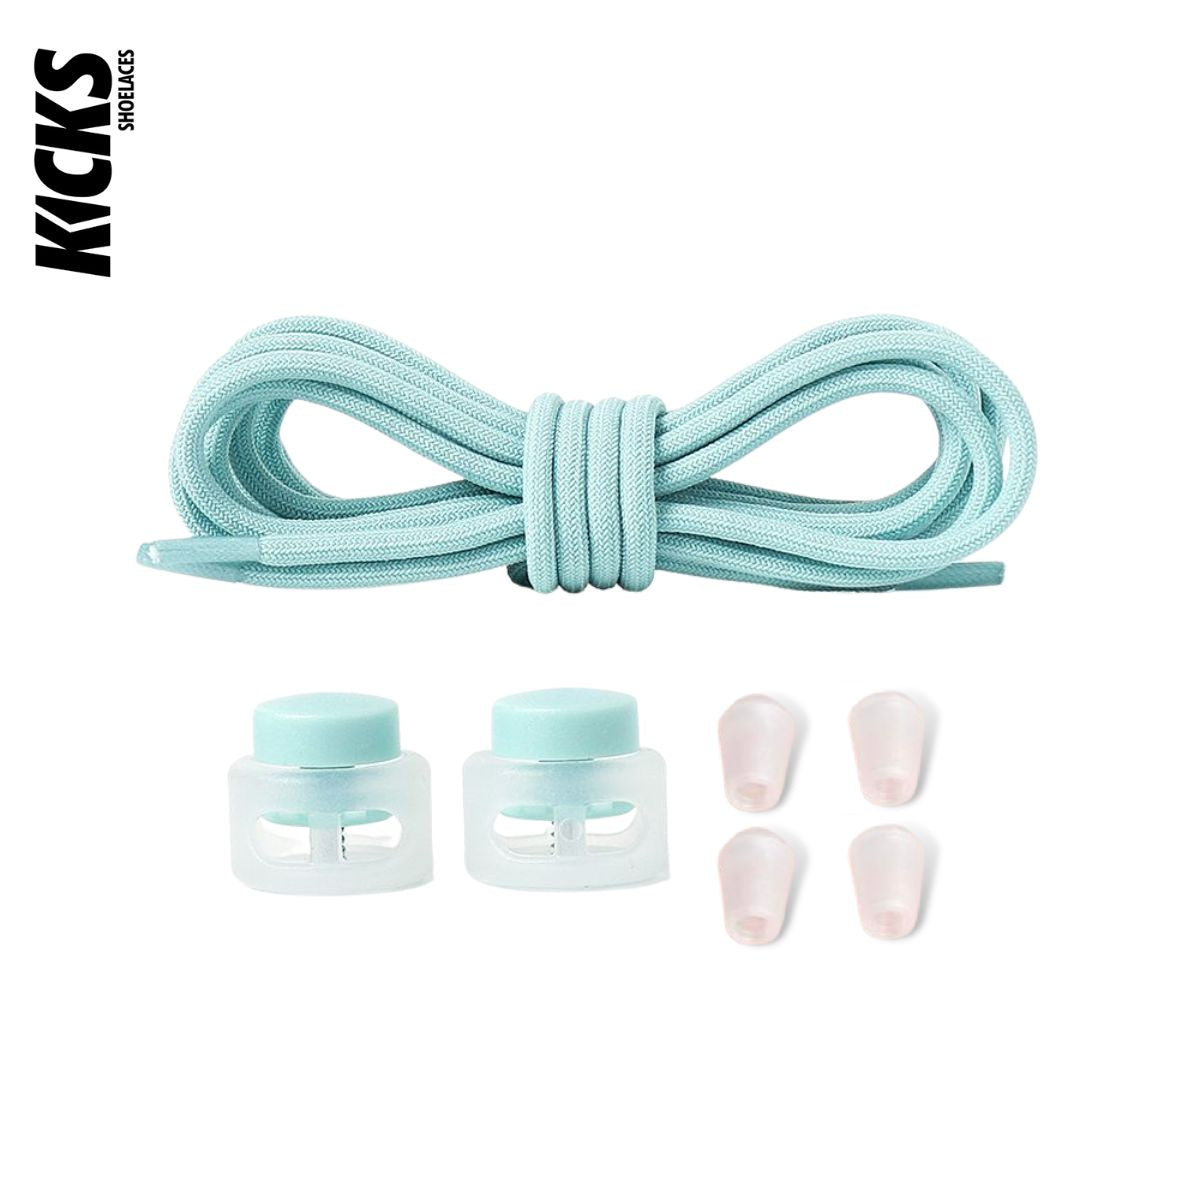 Pastel Blue Round No-Tie Shoelaces - Kicks Shoelaces